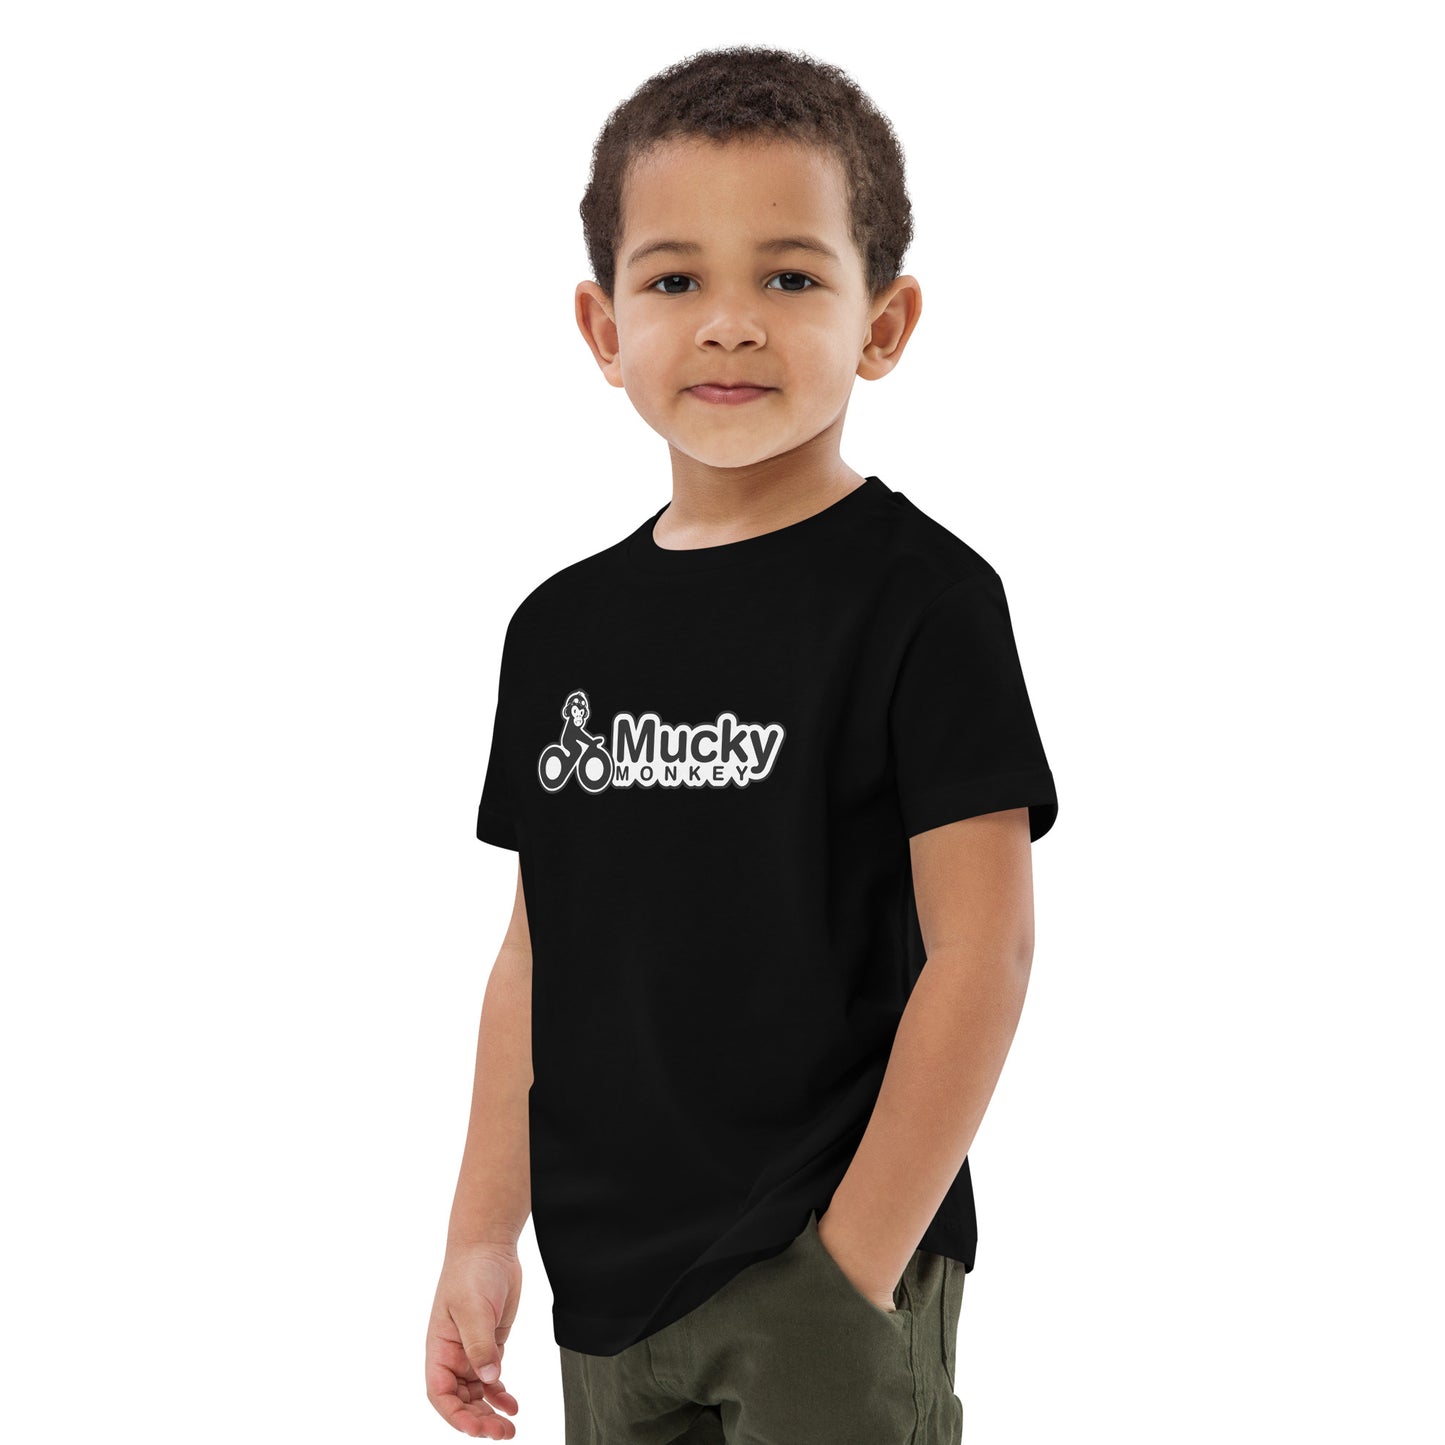 Mucky Monkey - Kids T- shirt